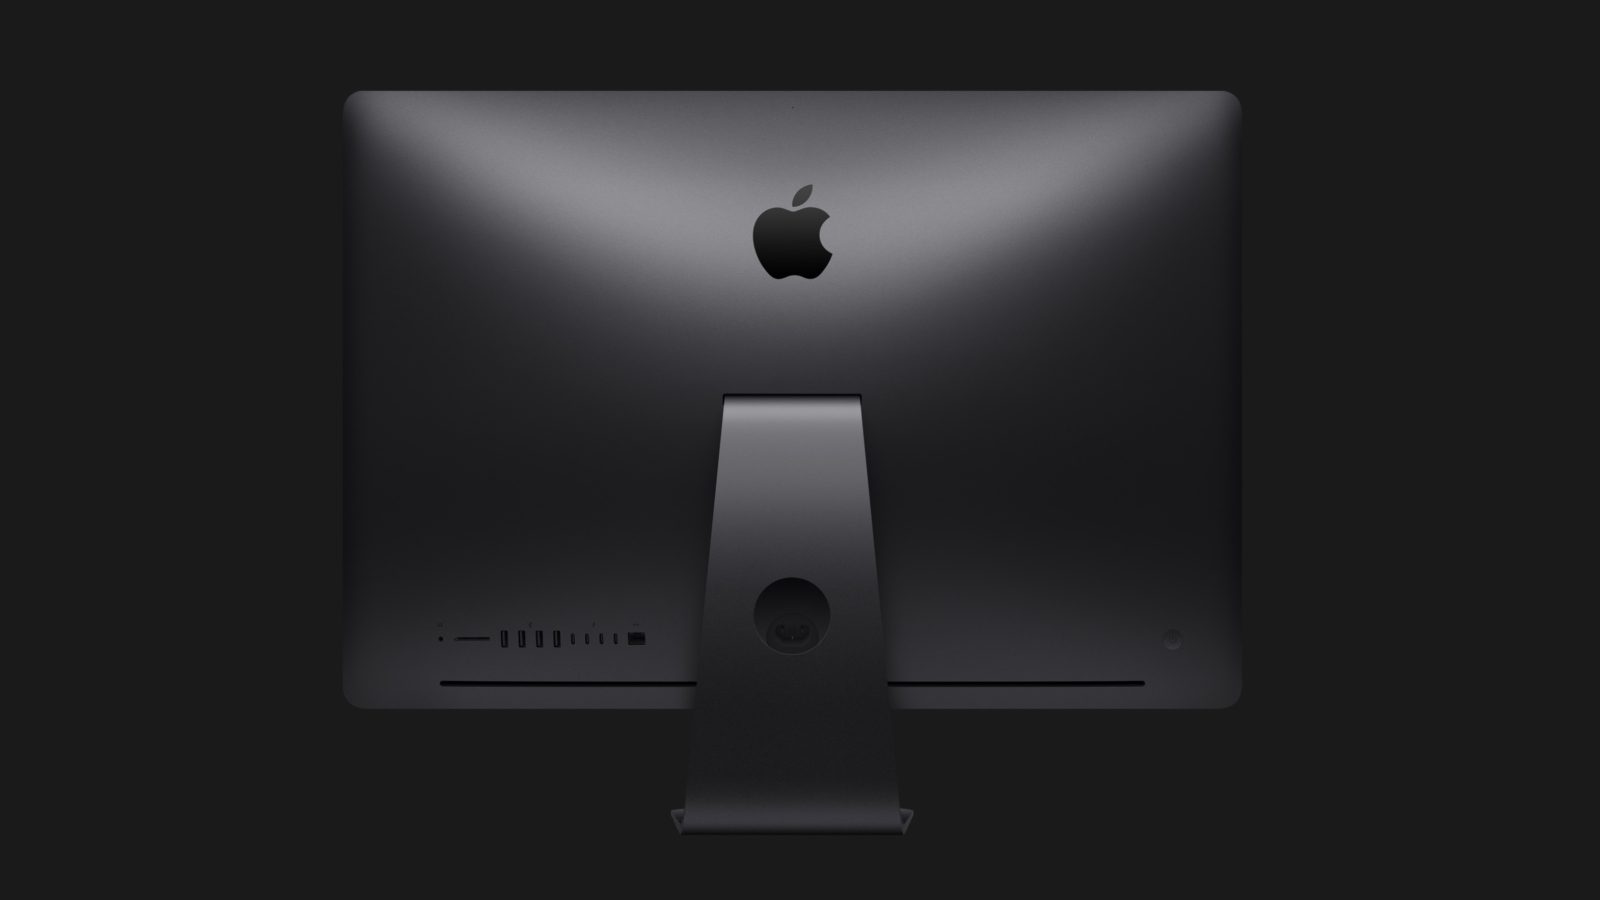 To “hey, Siri” έρχεται με τον νέο iMac Pro που ενσωματώνει και το A10 Fusion chip από το iPhone 7